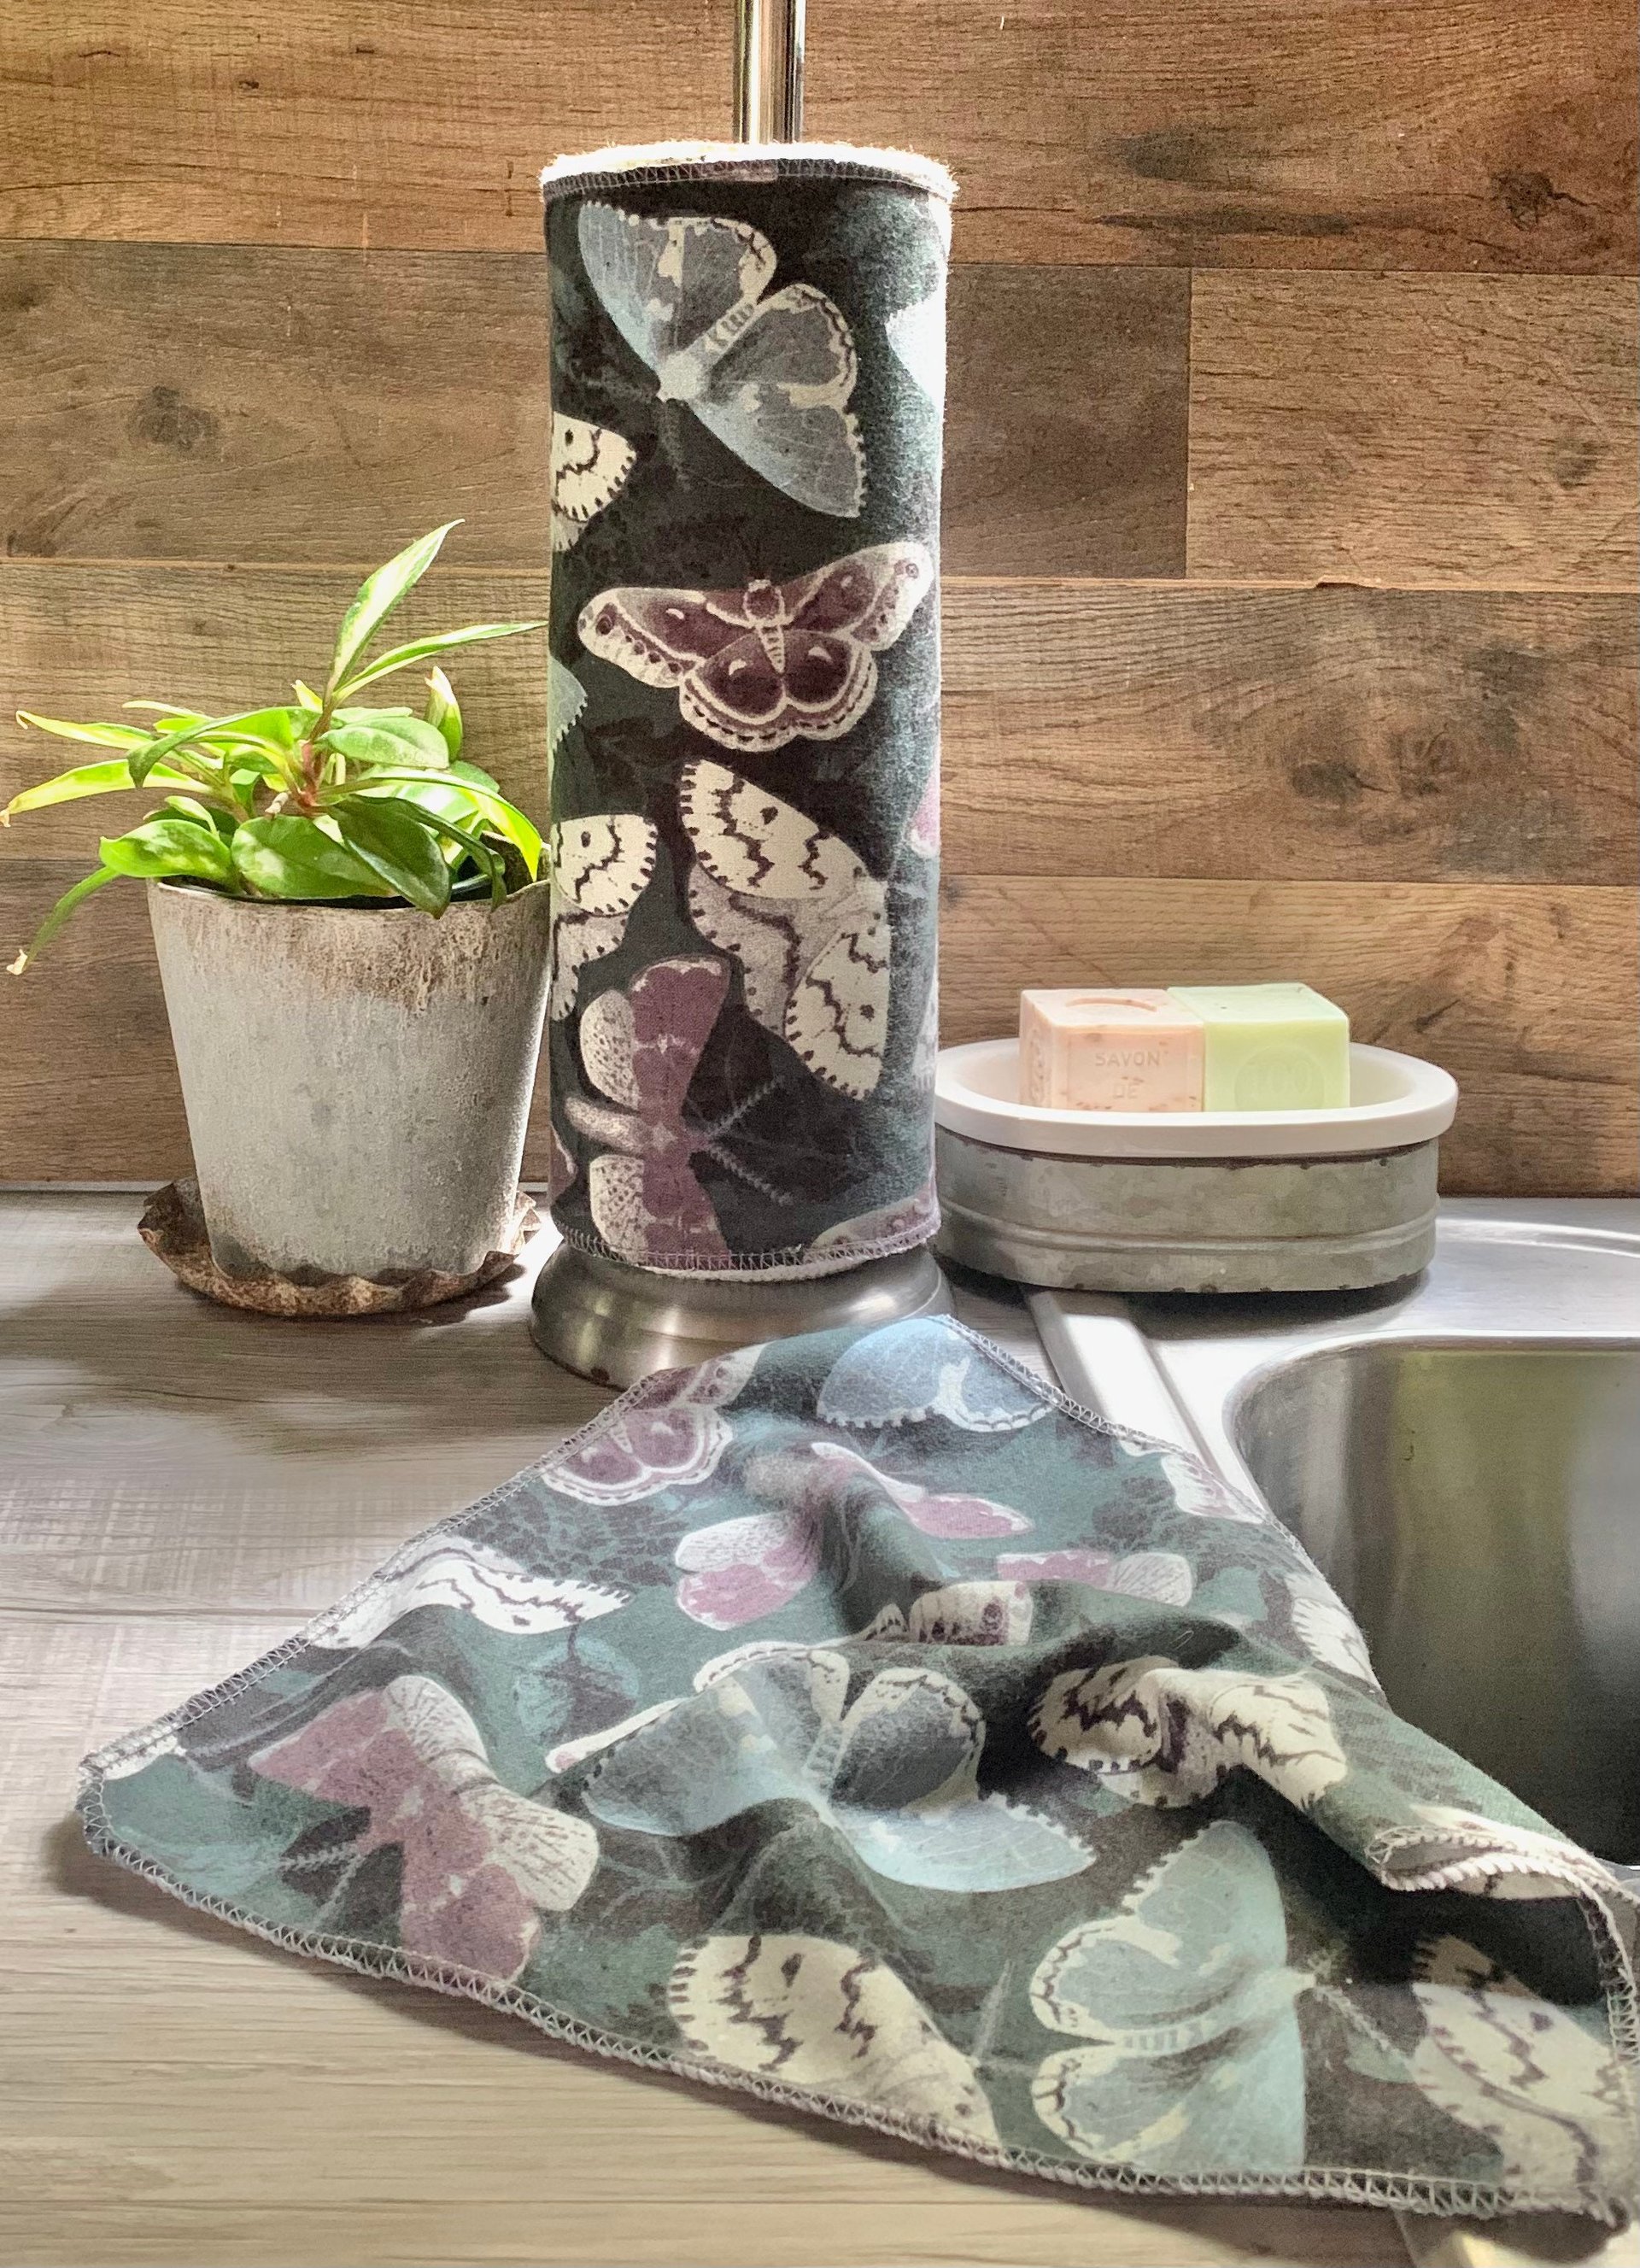 Winter Moths Paperless Towels || Unpaper Towels || Eco Sustainable Kitchen